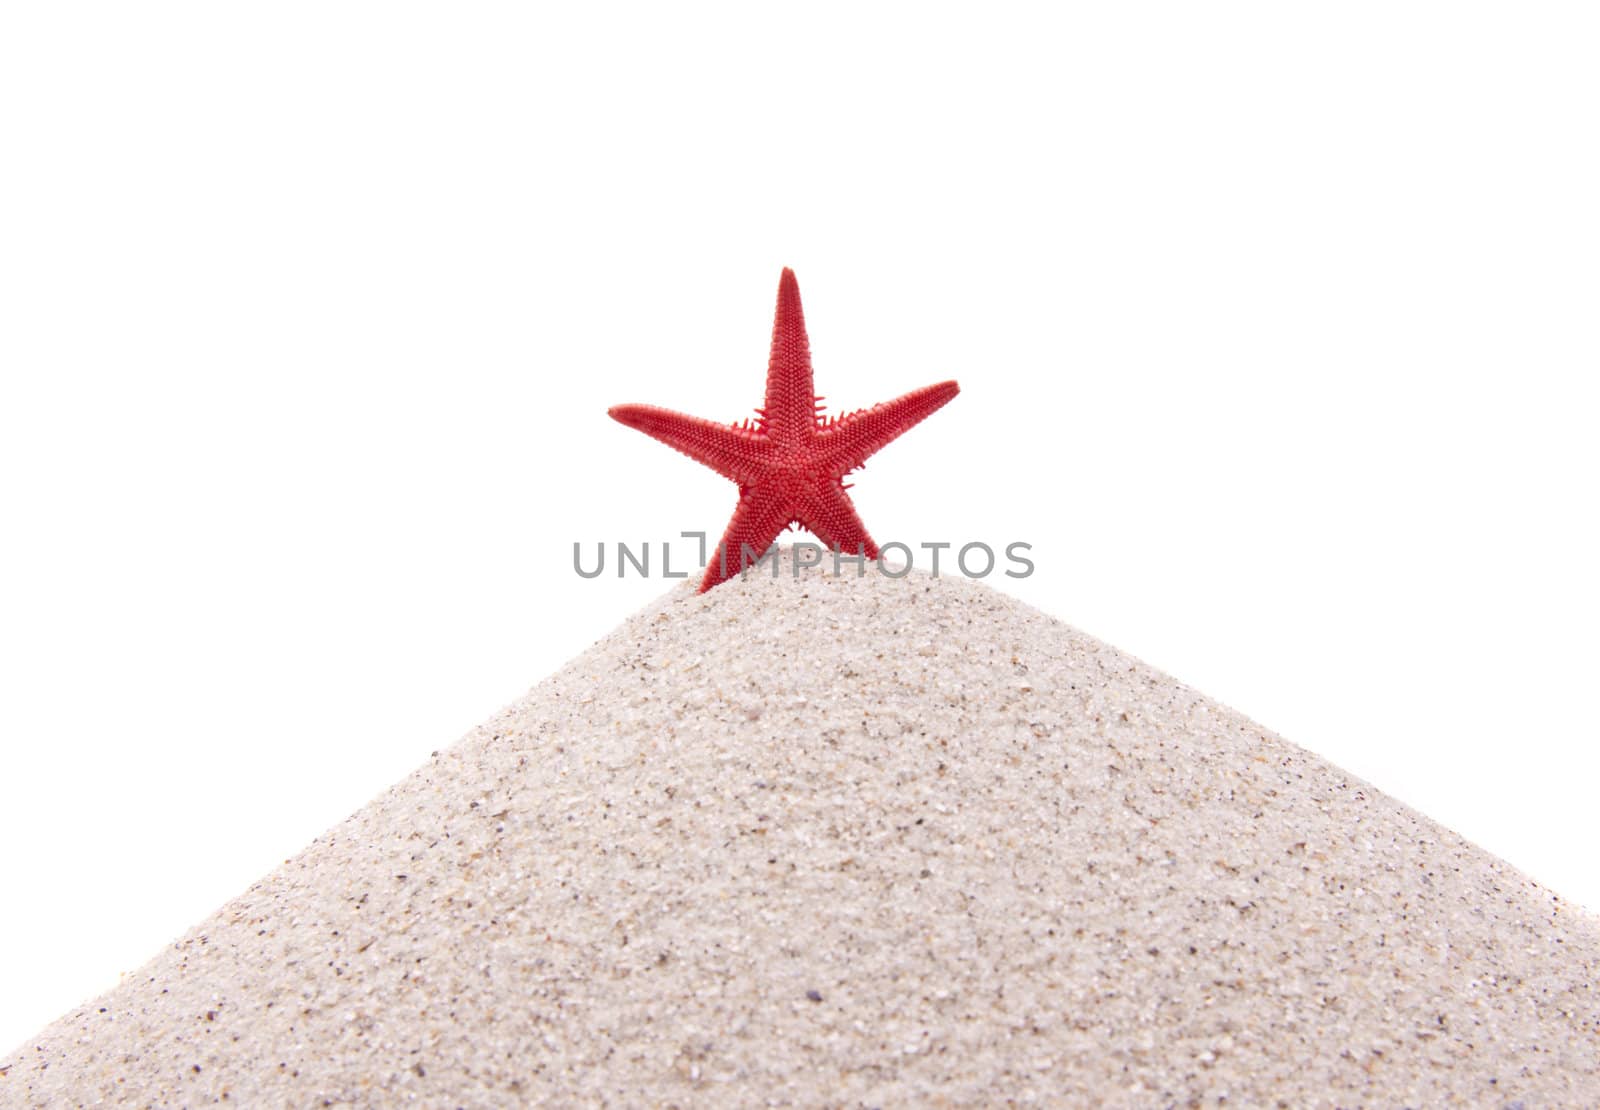 Red Sea star on the white sand beach by ozaiachin